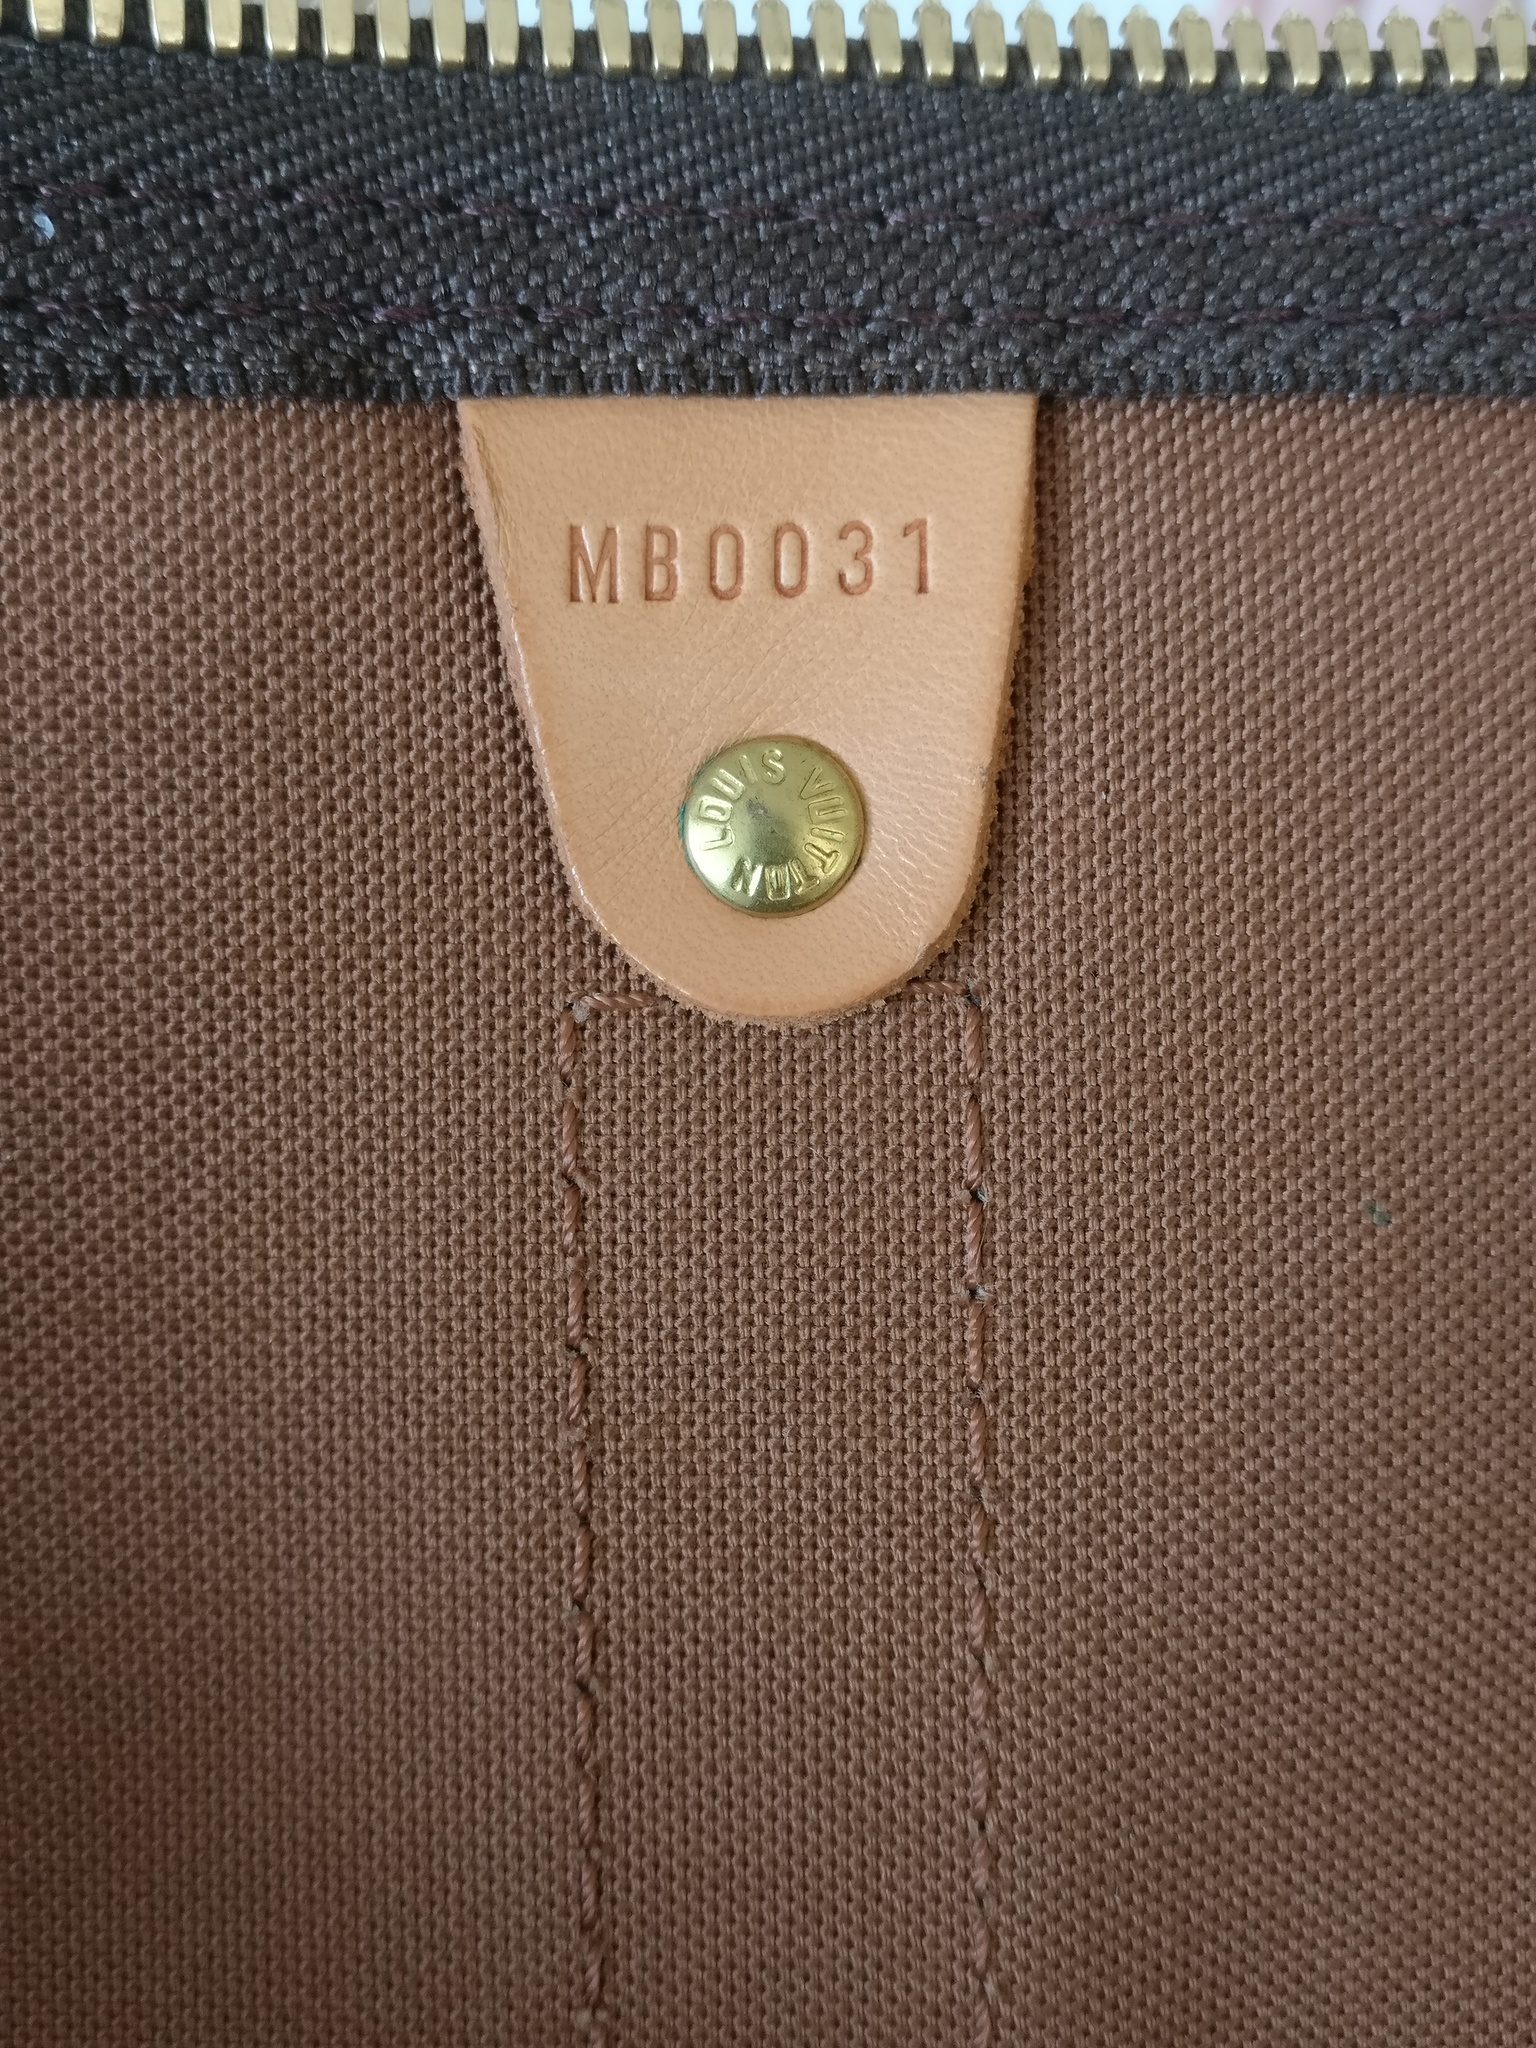 Louis Vuitton Keepall Bandouliere 60